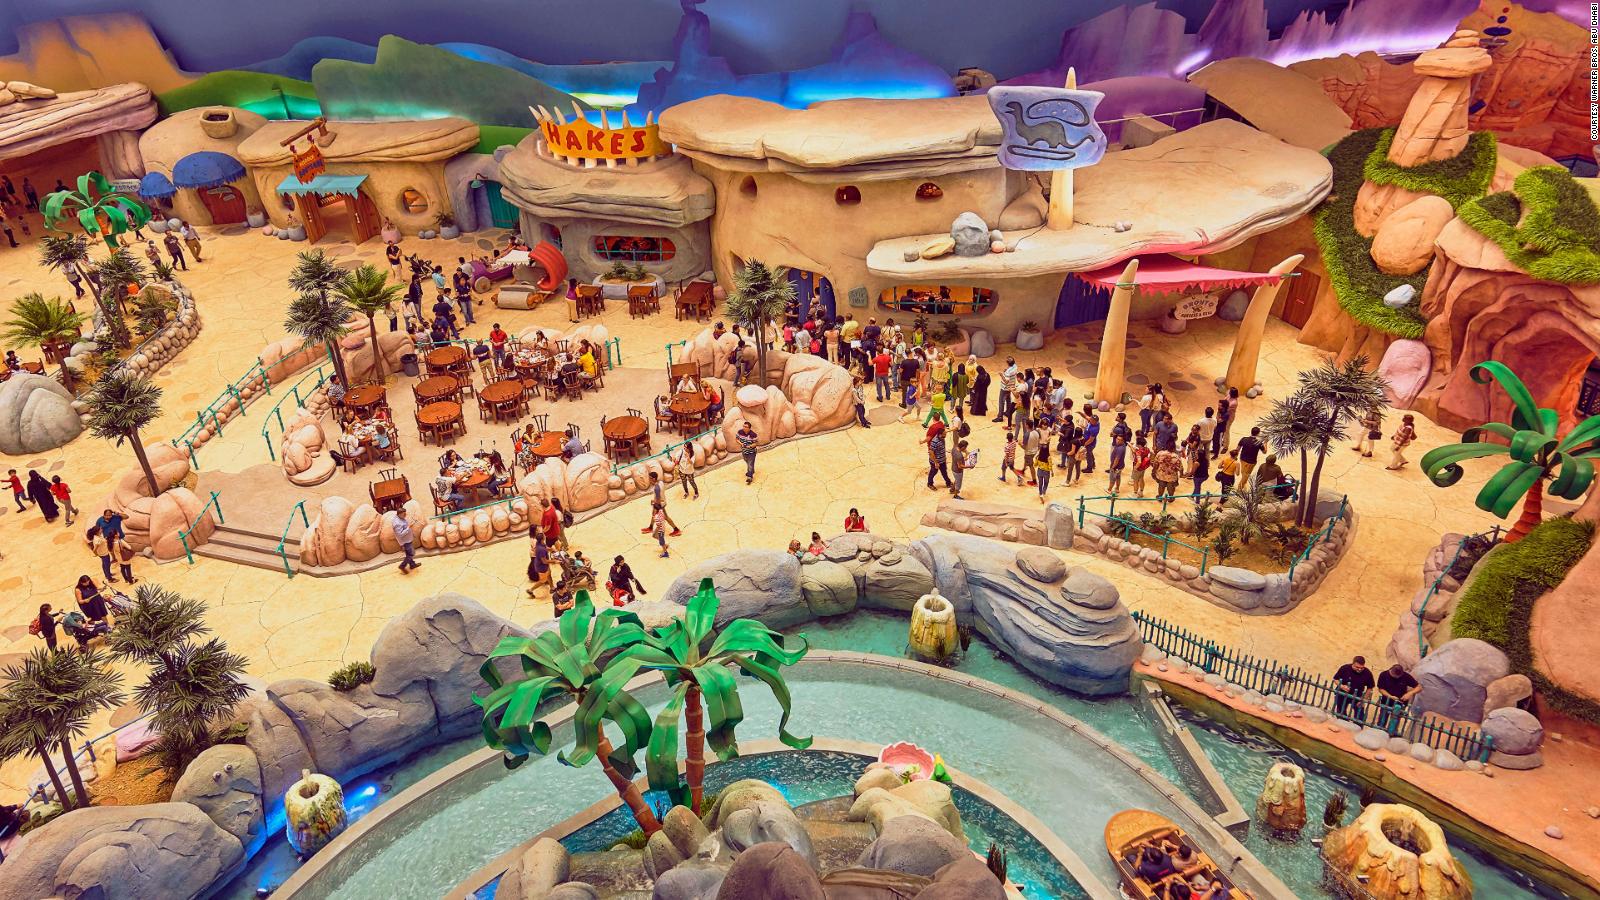 Inside Abu Dhabi's new Warner Bros. World theme park (photos)